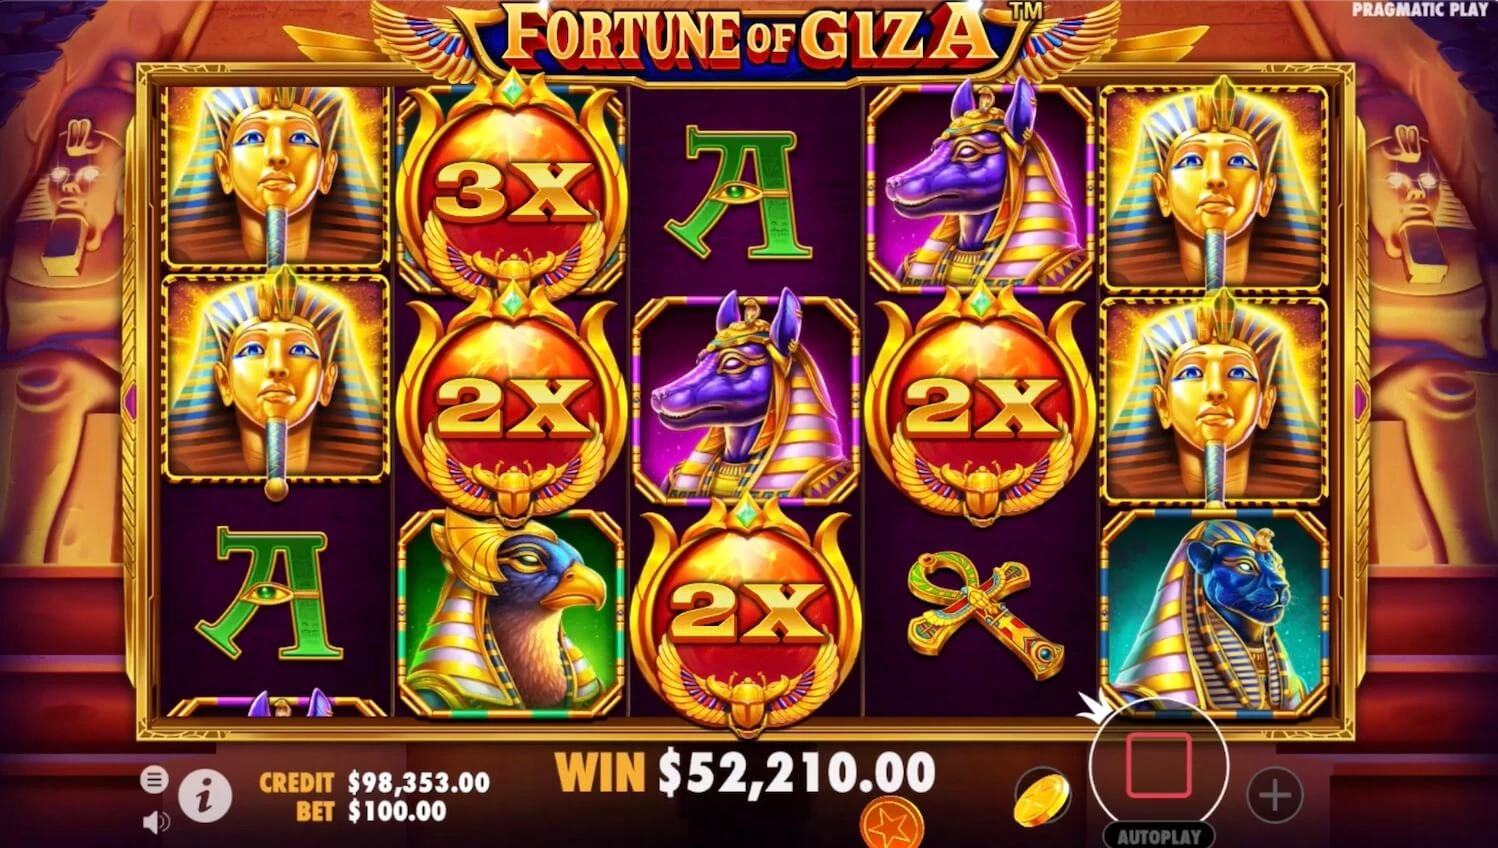 Fortune of Giza win 52000 dollars